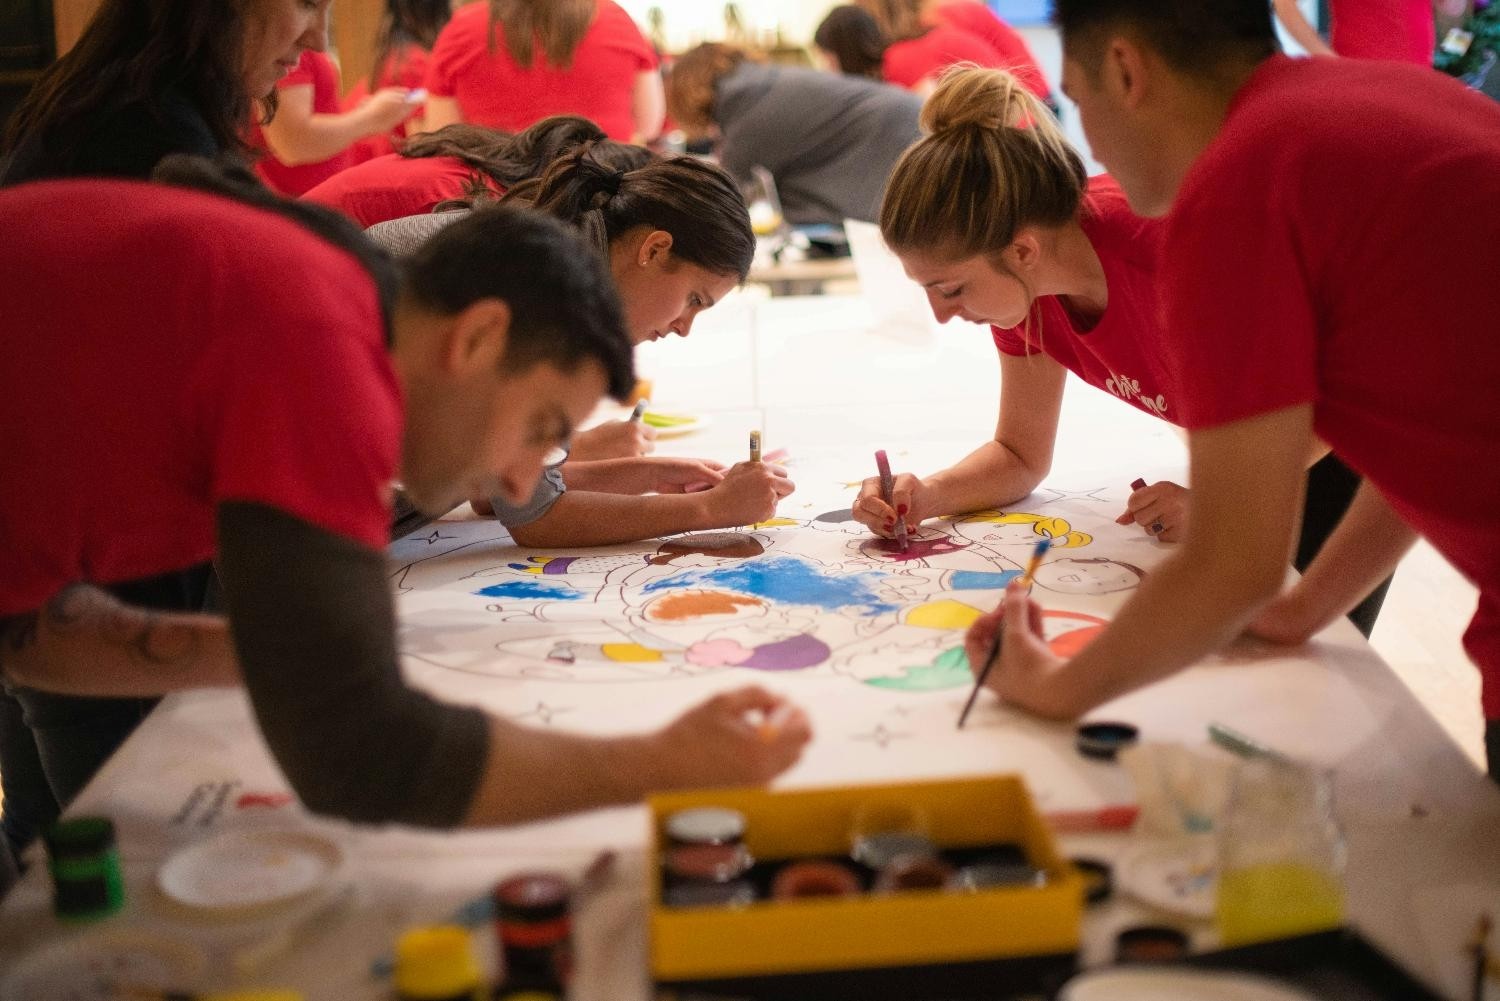 Adobe employees volunteering to create change